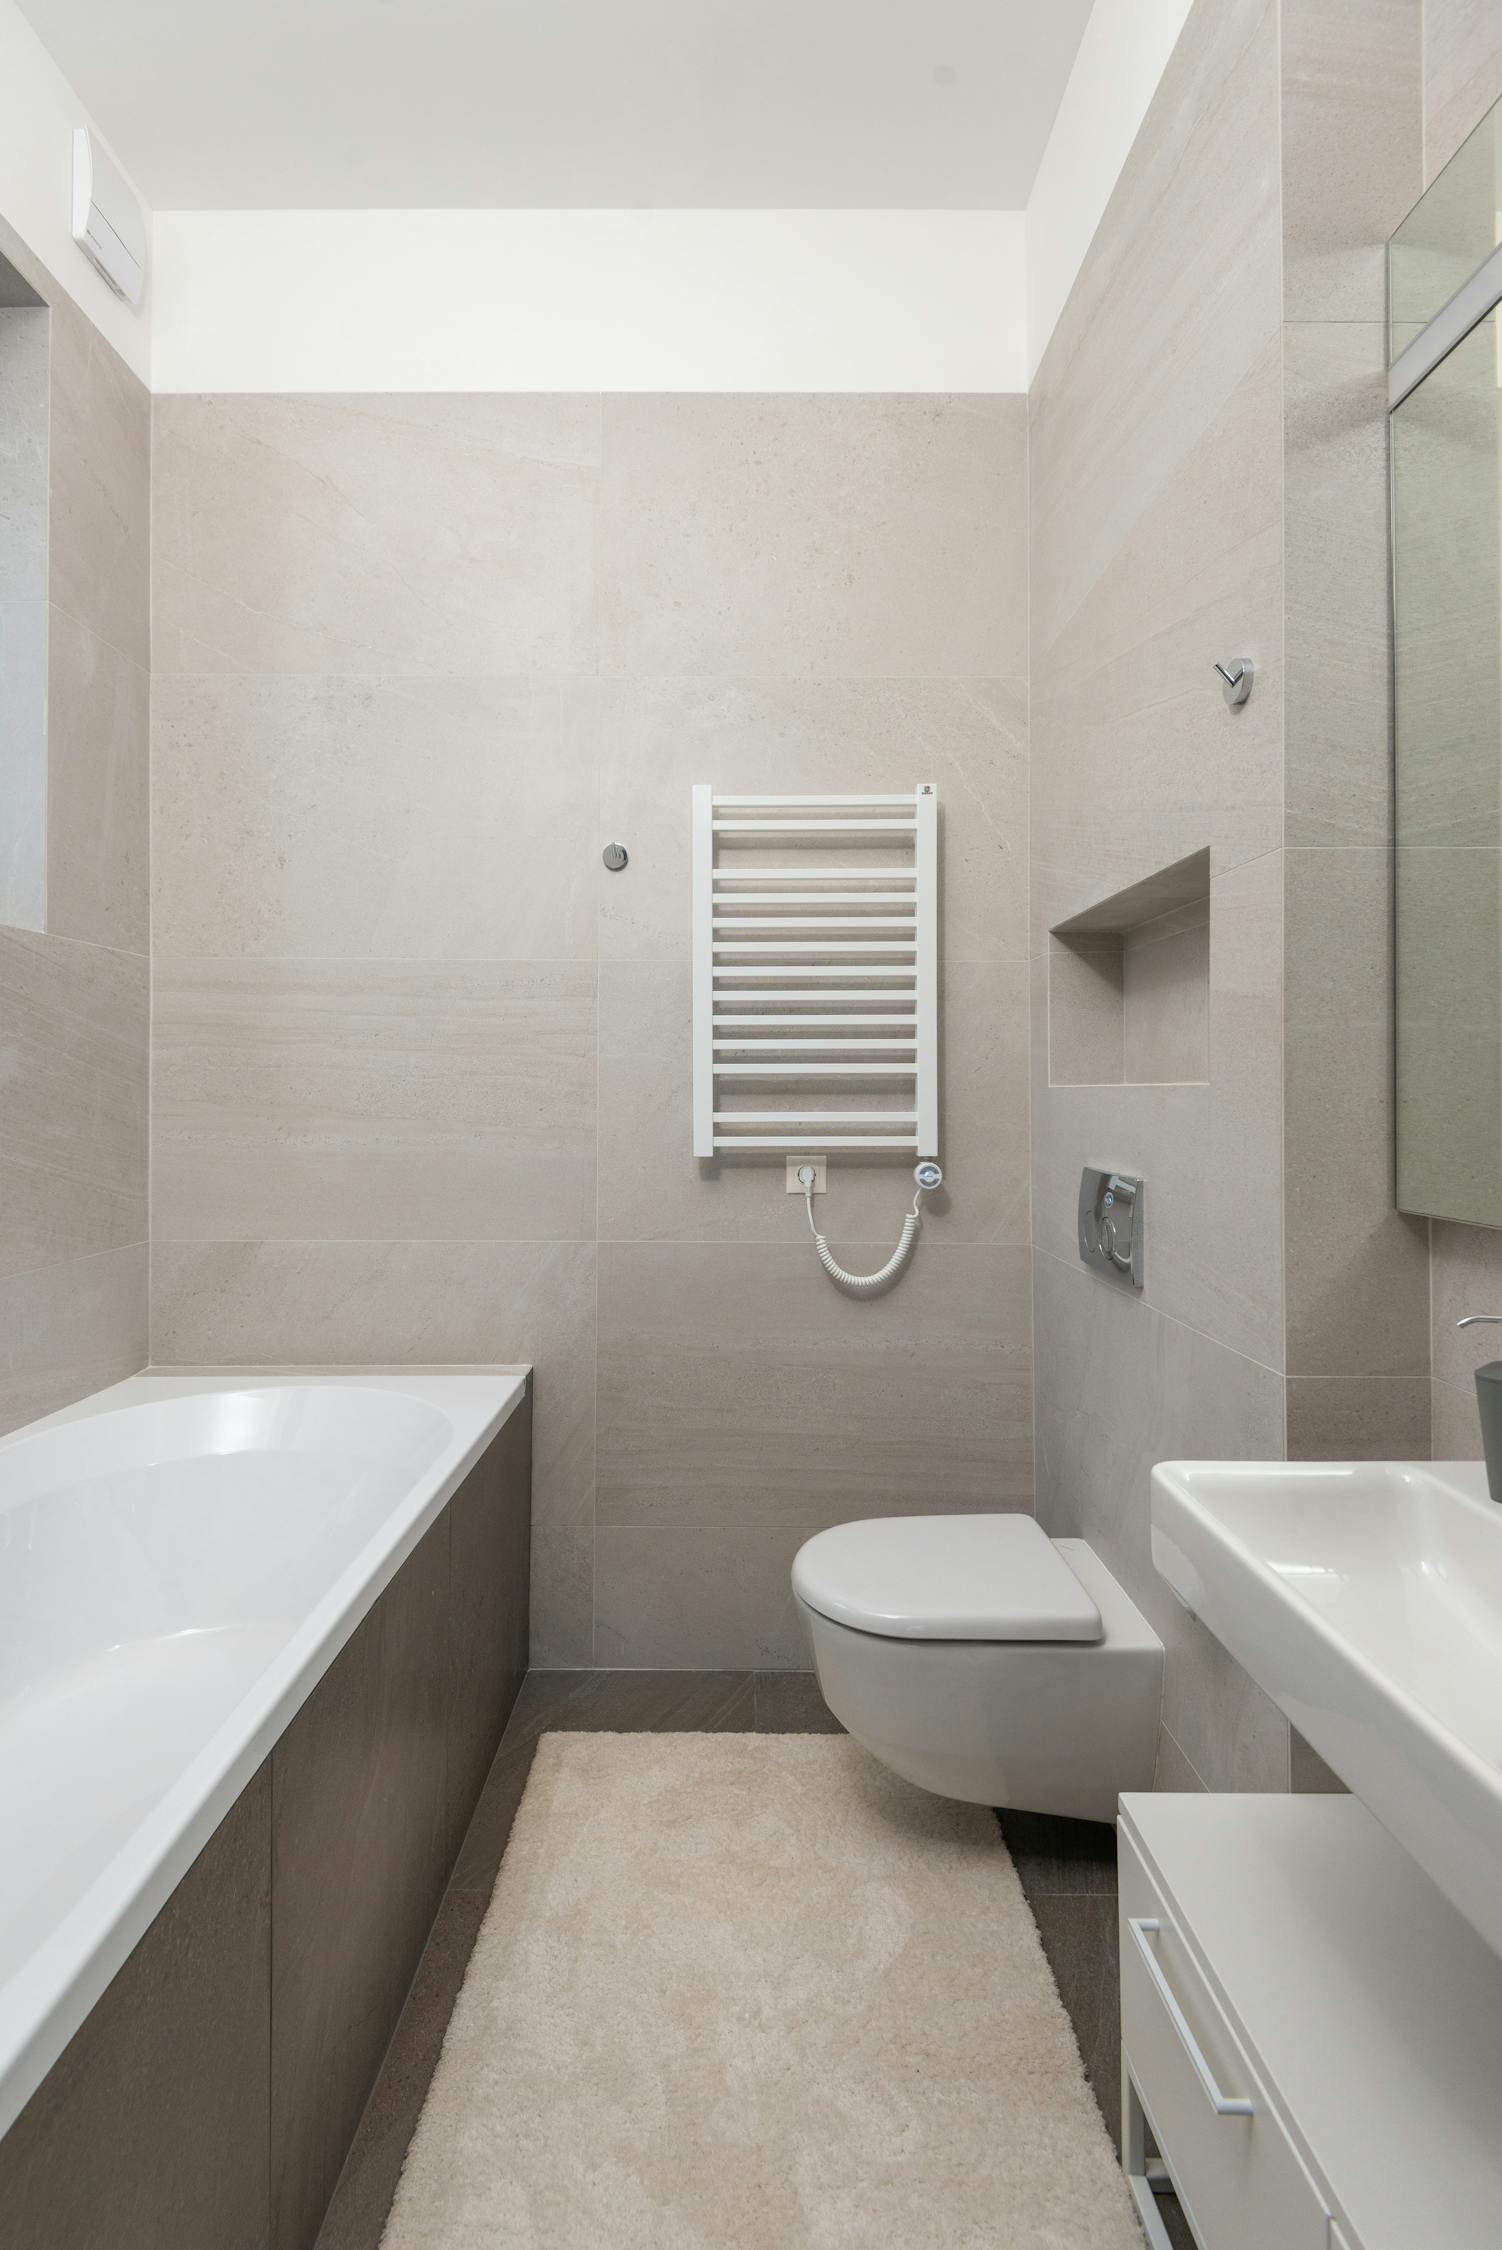 Interior of minimalist styled bathroom with white ceramic bathtub